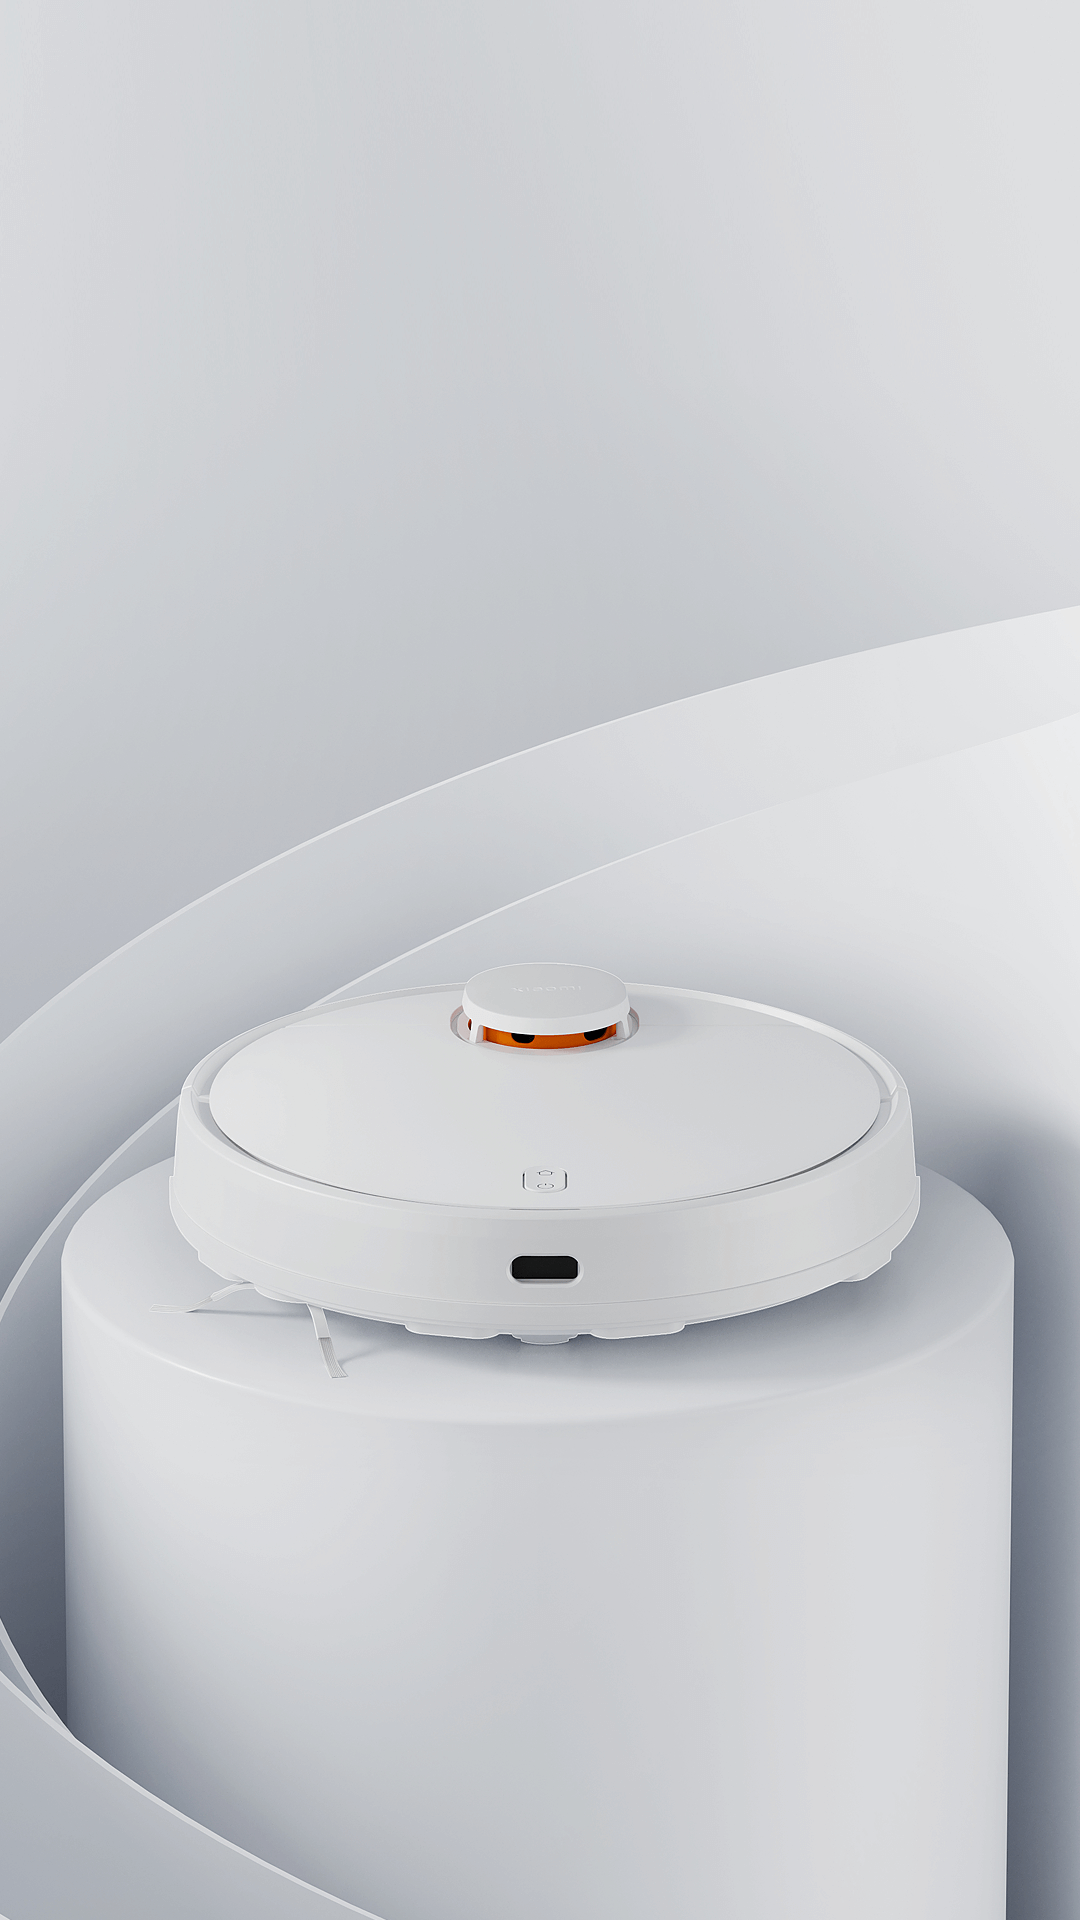 Robot Aspirador S12 - Robot aspirador versátil y autónomo, Blanco - Xiaomi